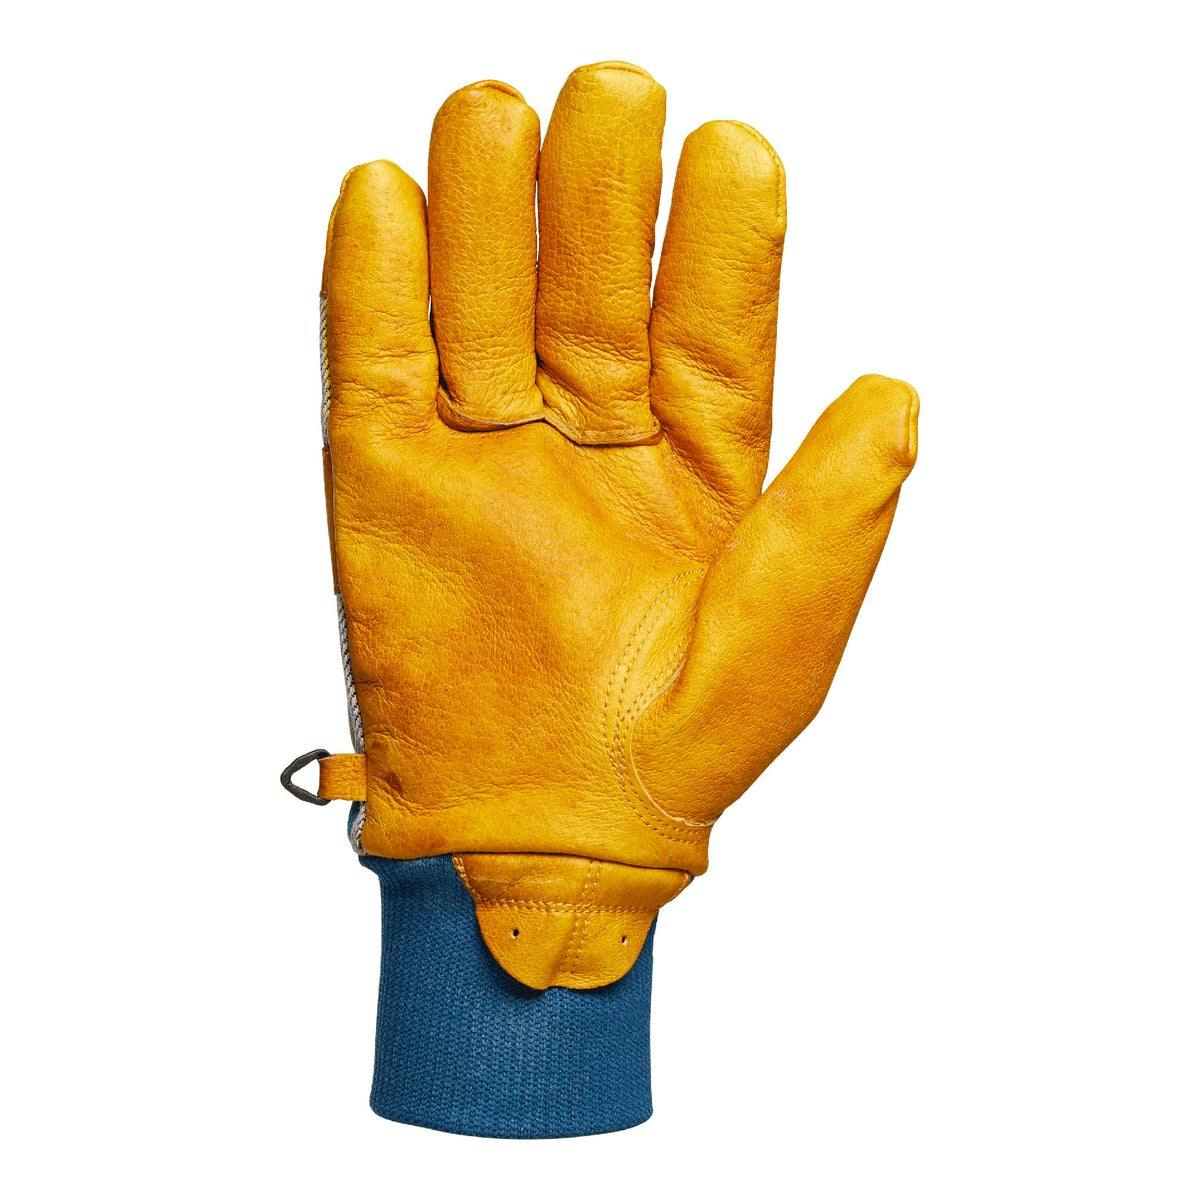 Flylow Tough Guy Gloves